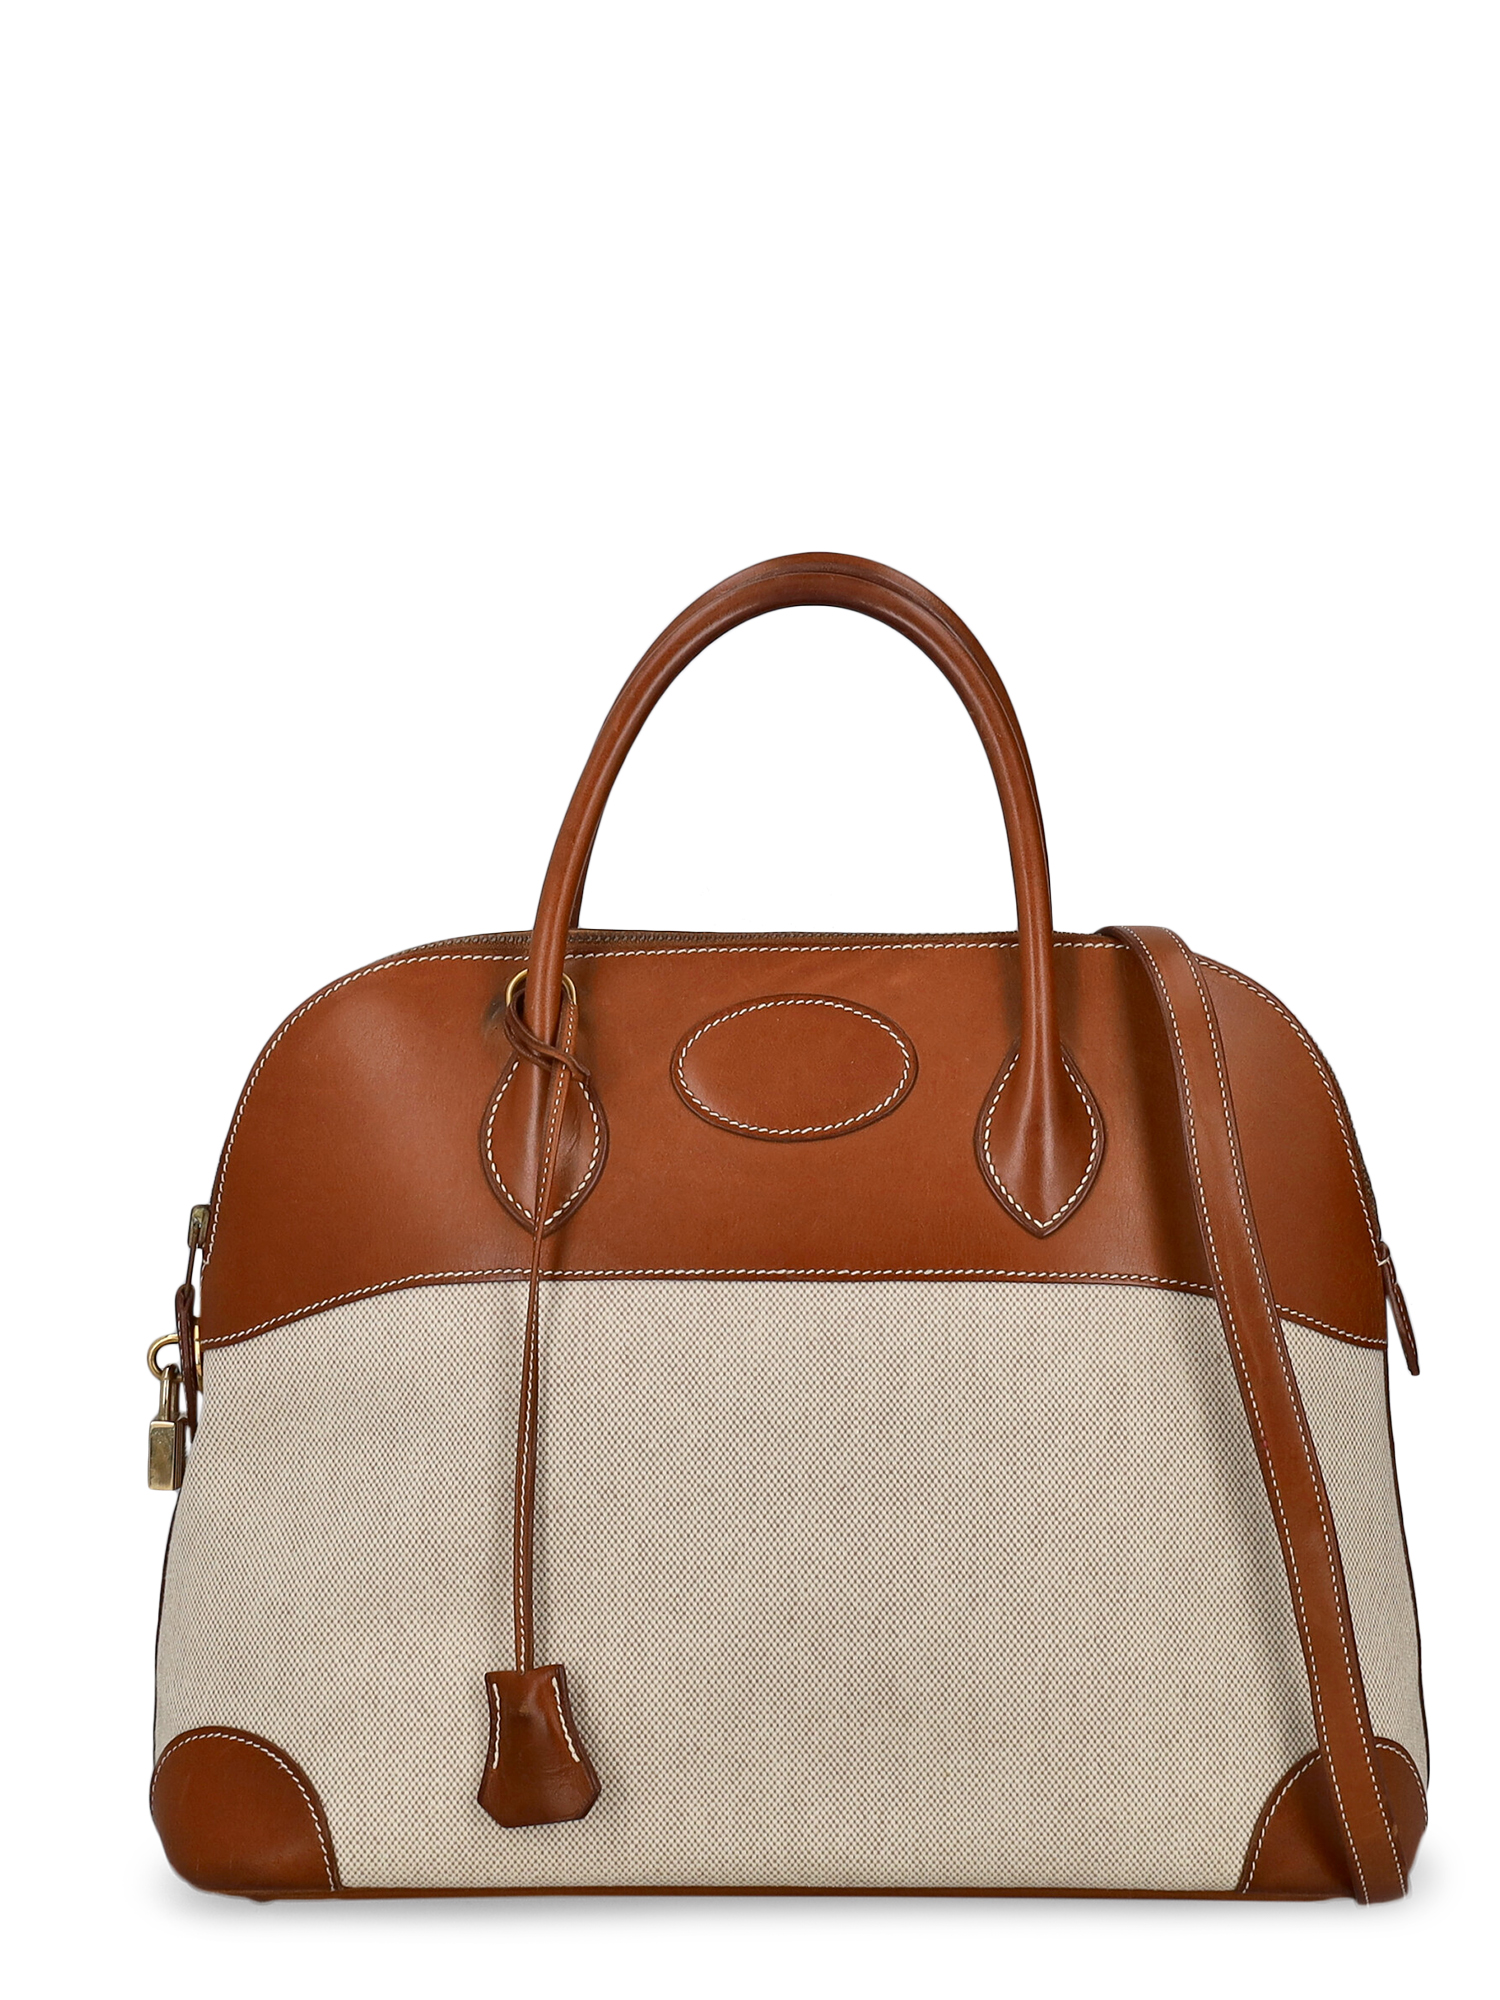 Pre-owned Hermes Women's Handbags - Hermès - In Brown Fabric, Leather